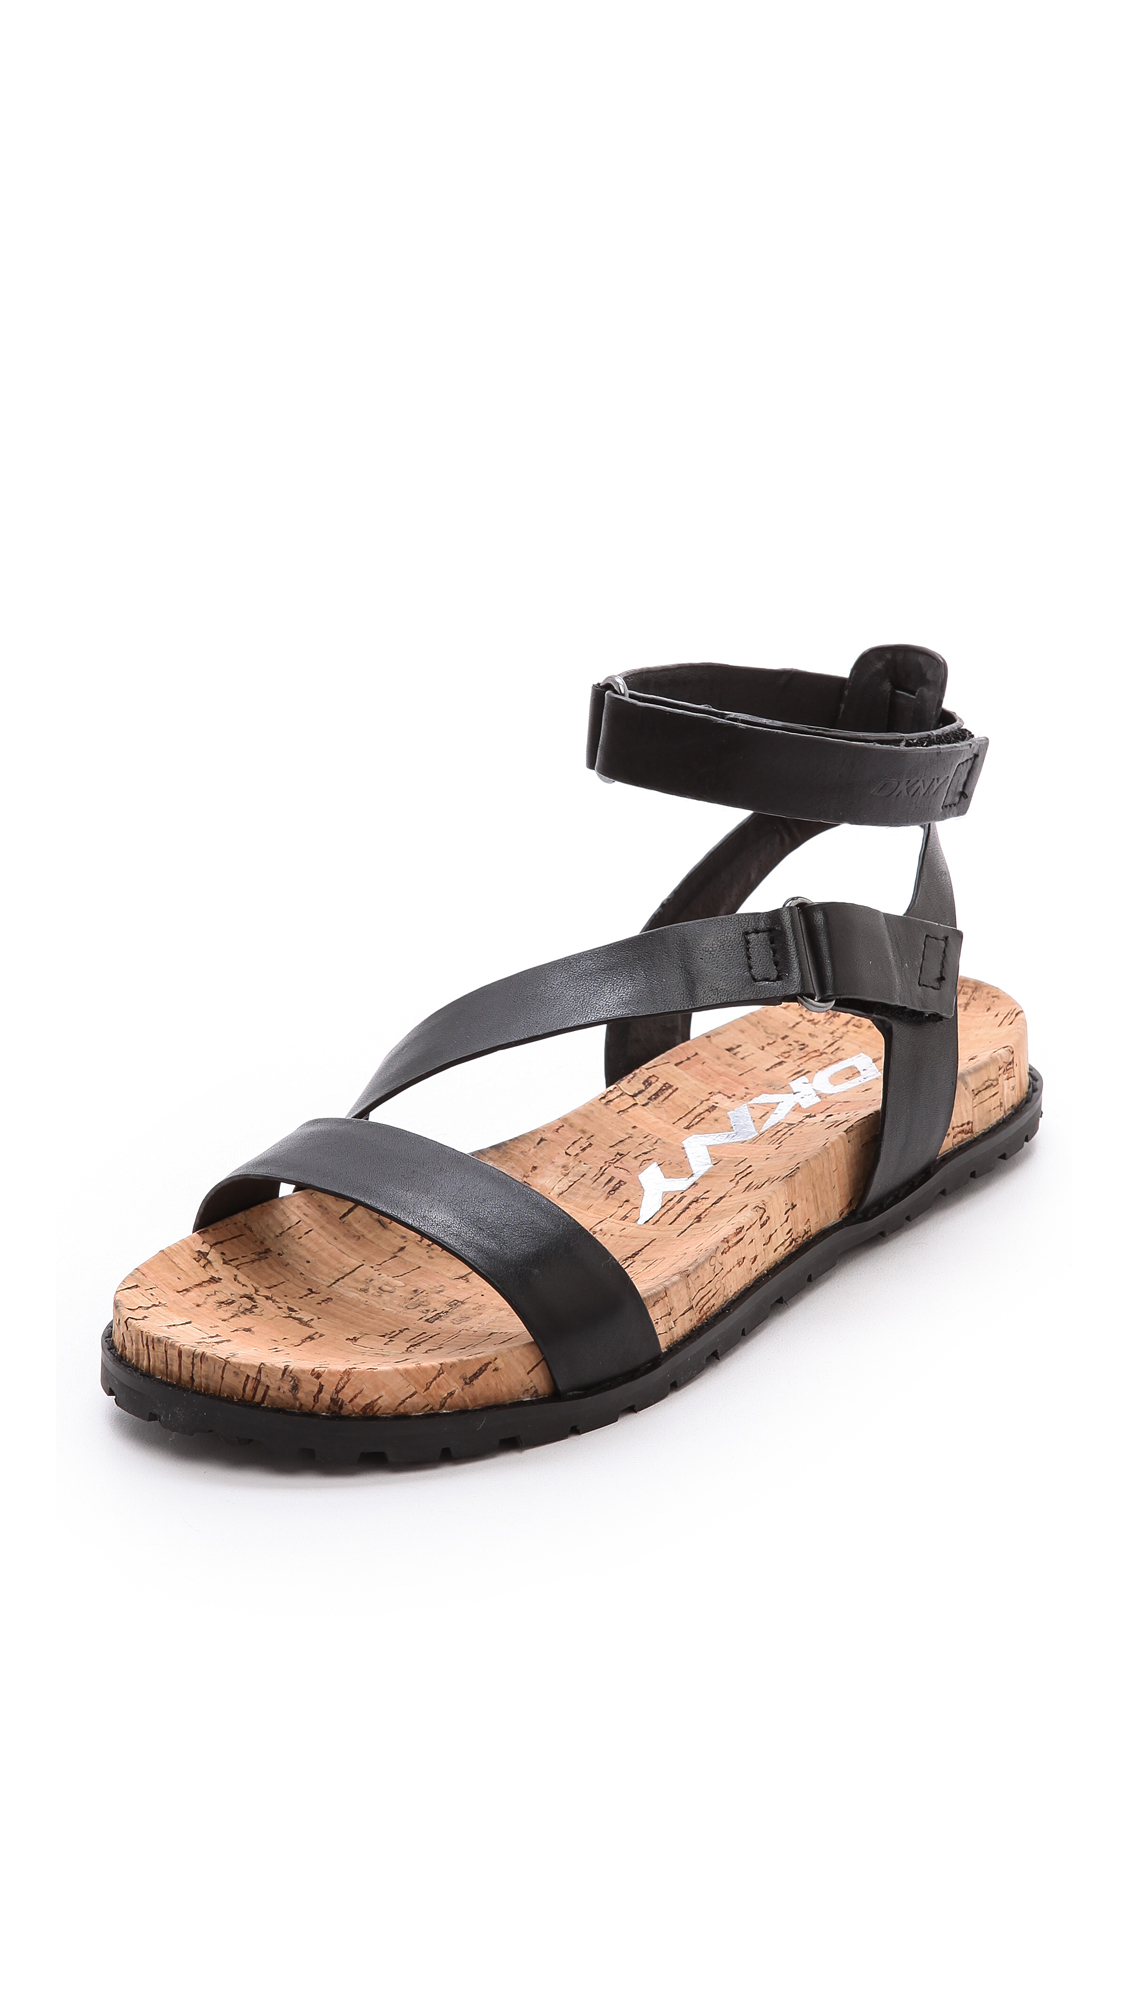 Lyst - Dkny Sterling Ankle Strap Flat Sandals Black in Black